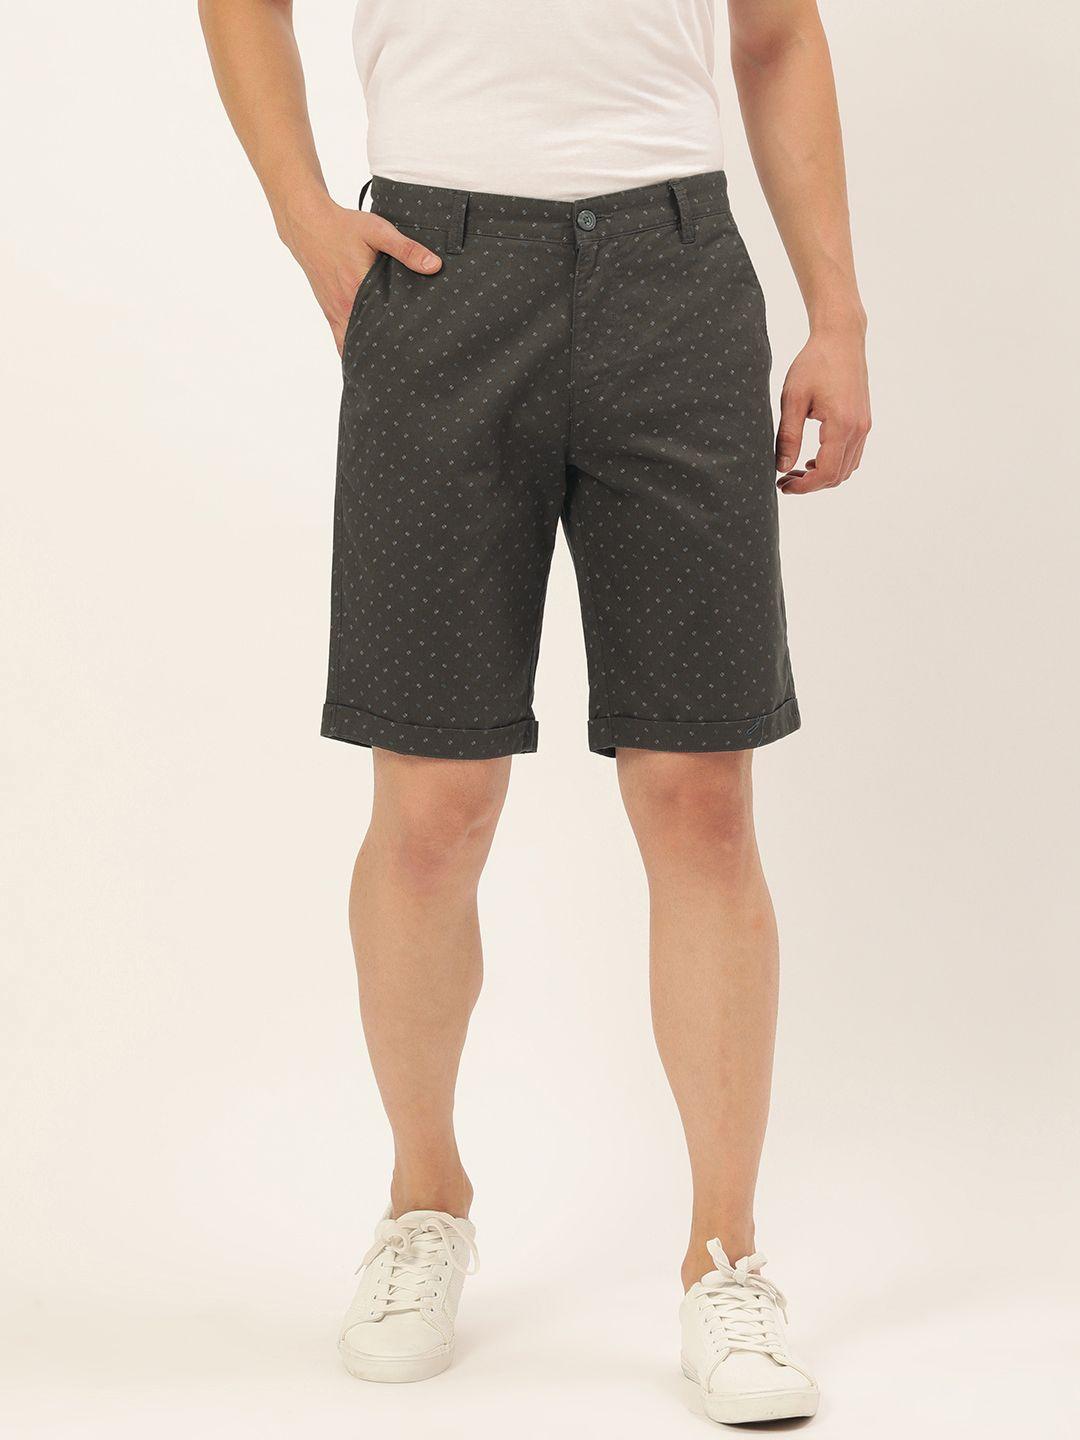 ivoc-men-charcoal-printed-shorts